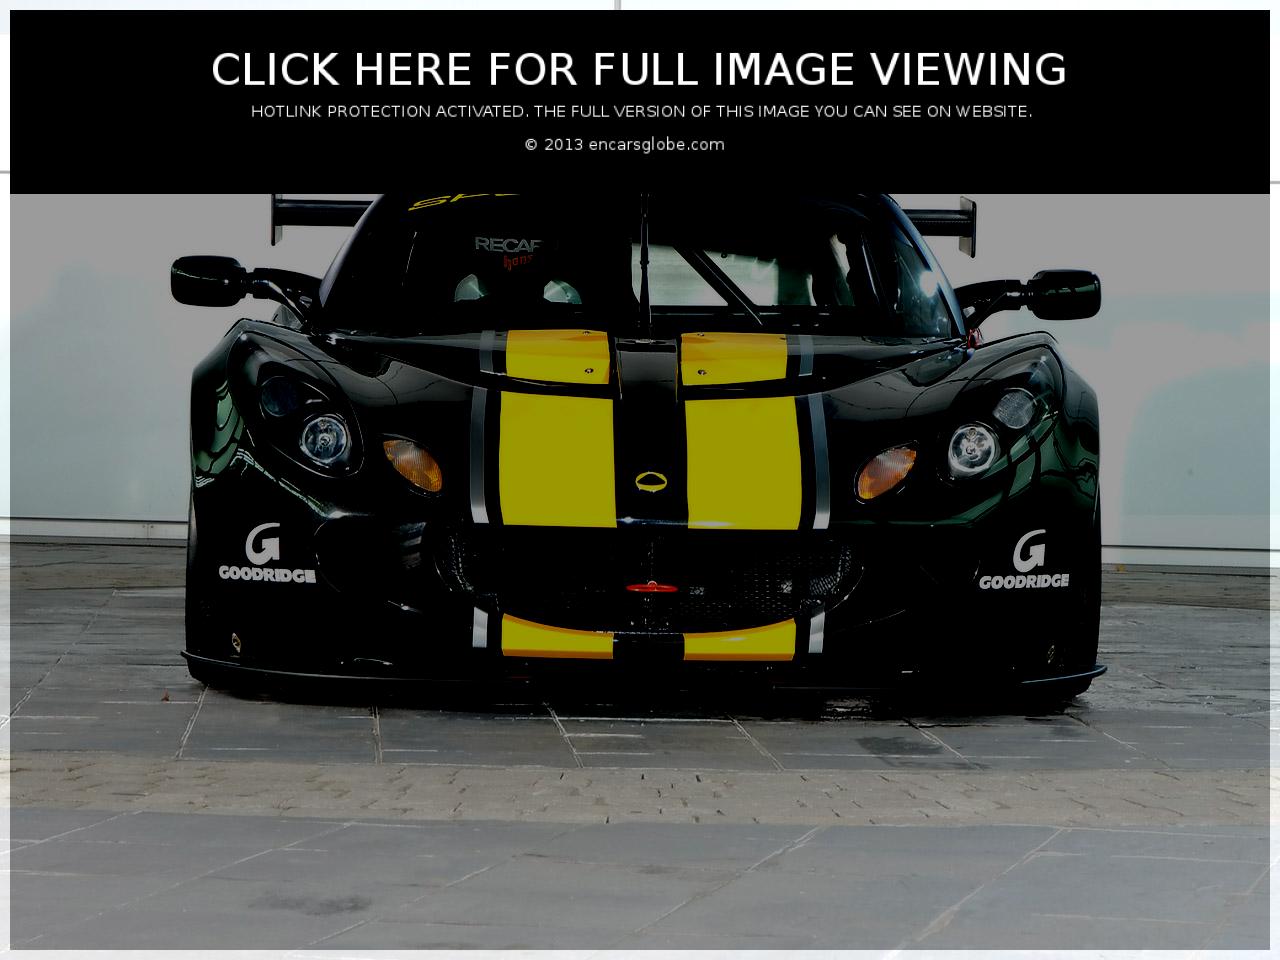 Lotus GT: Description of the model, photo gallery, modifications ...